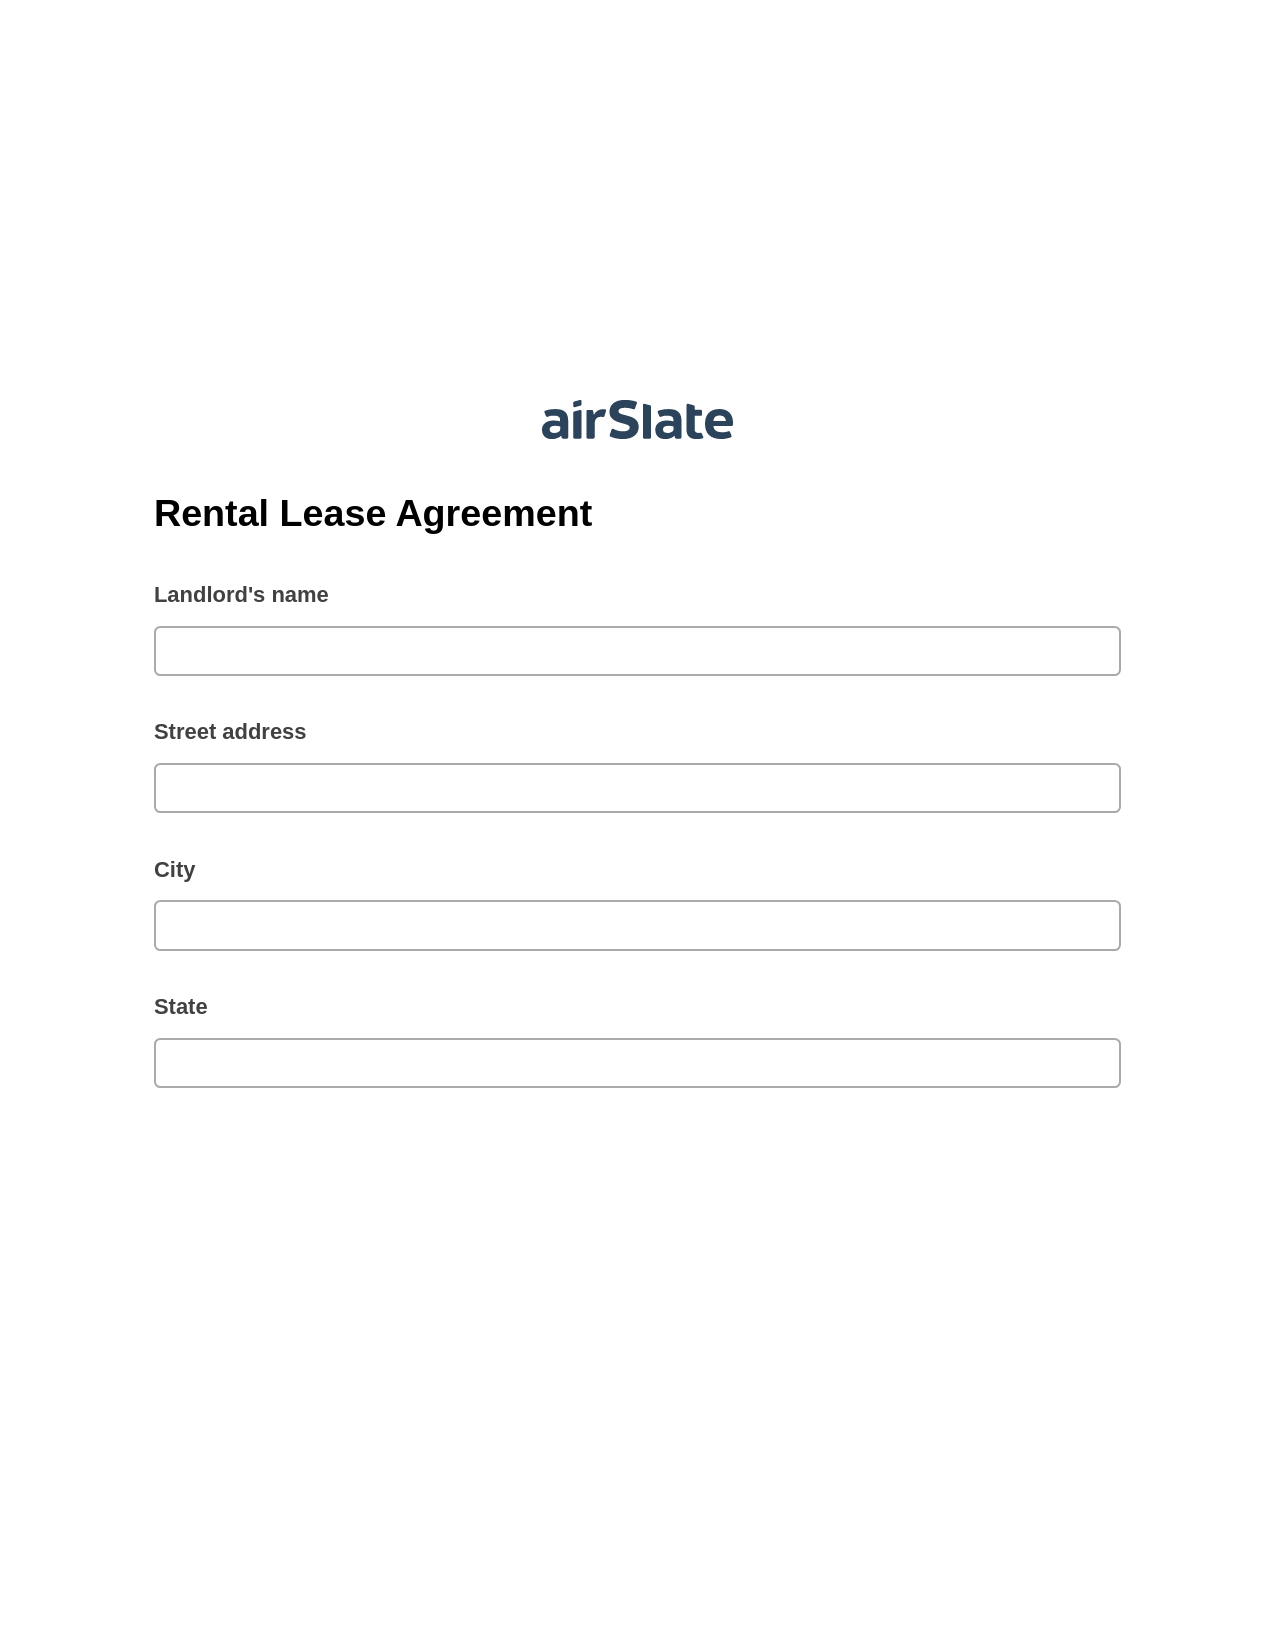 Rental Lease Agreement Pre-fill from MySQL Dropdown Options Bot, Google Sheet Two-Way Binding Bot, Export to Smartsheet